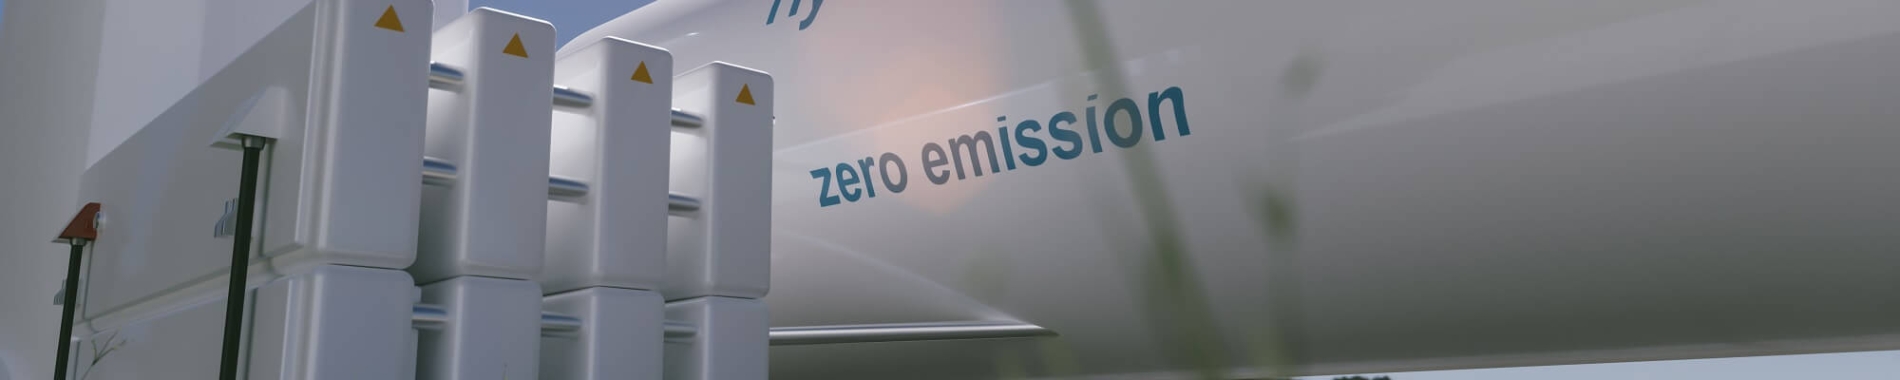 close up image of hydrogen storage branded zero emission  